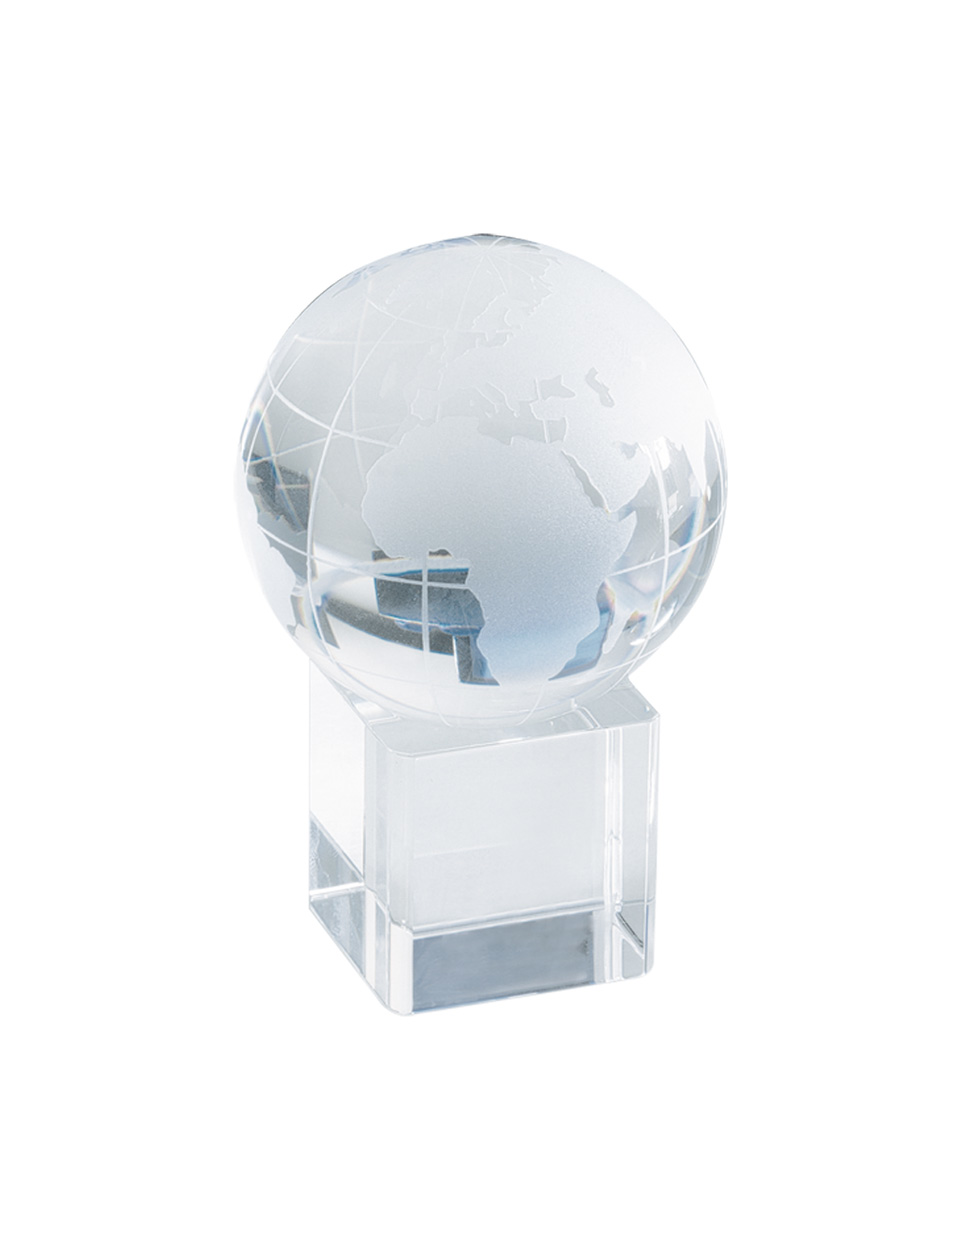 Satelite presse-papier globe en verre